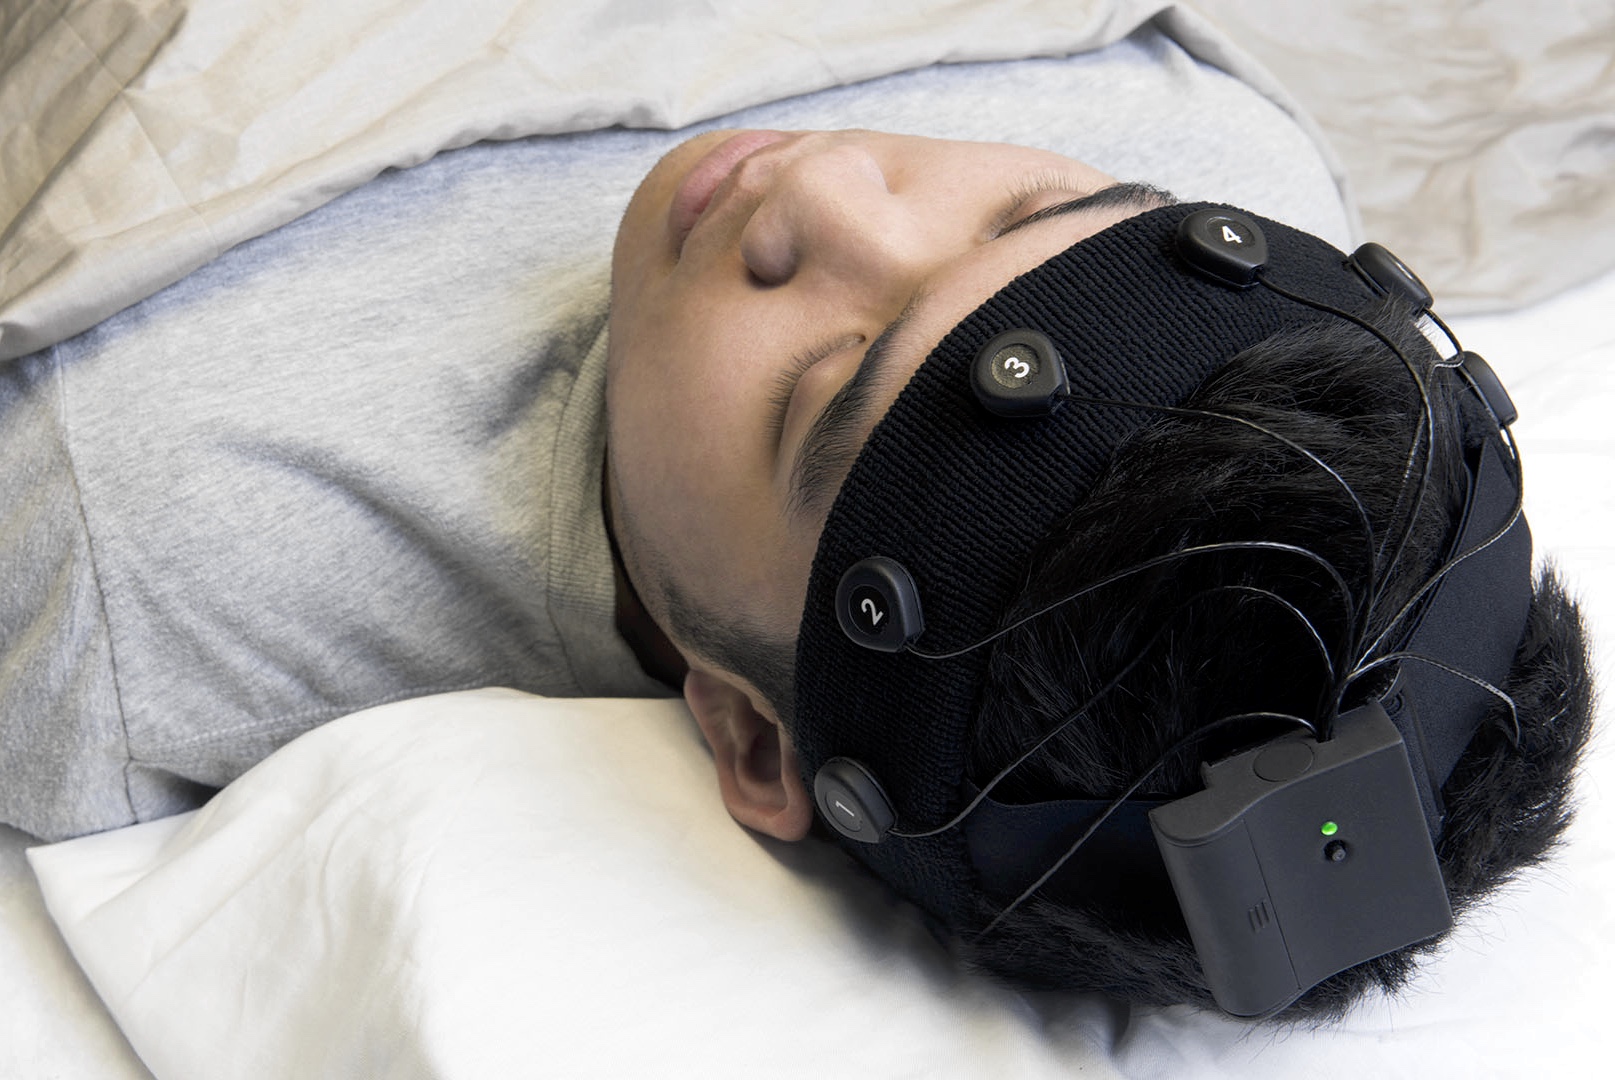 Ээг головы ребенку. ЭЭГ видеомониторинг. Шлем для сна. Электроэнцефалография сна. Видеомониторинг головного мозга.